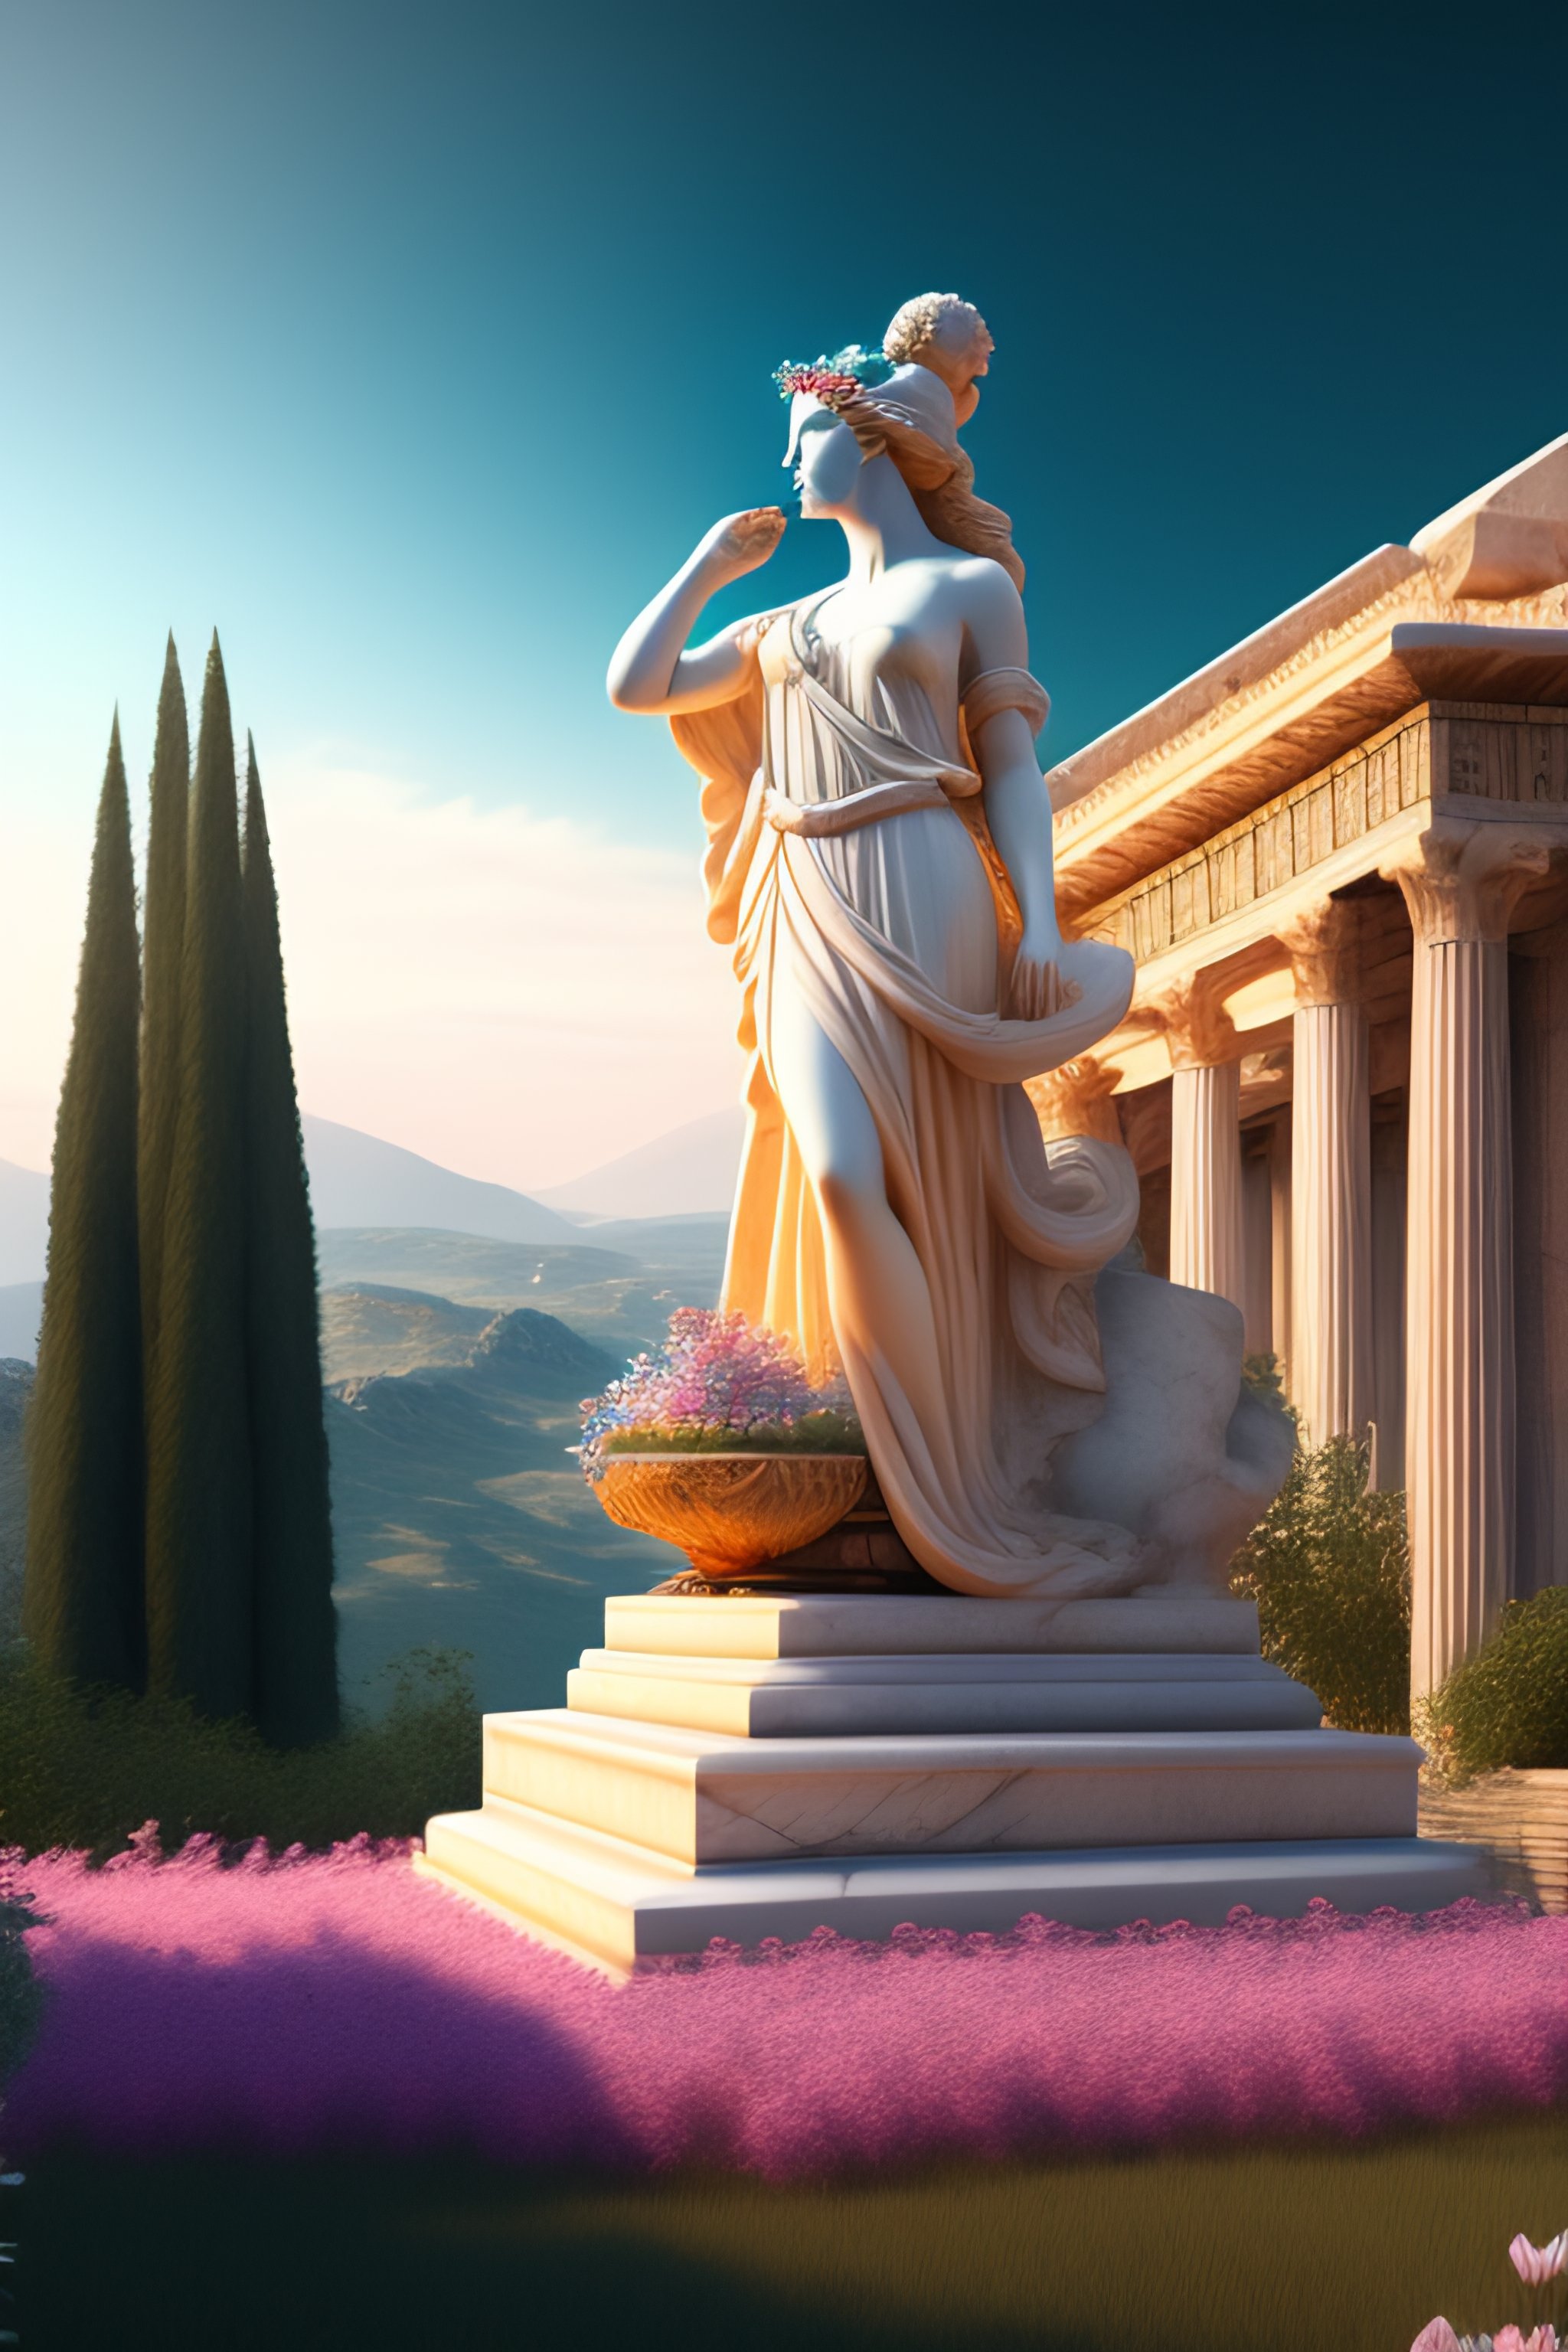 Greek Marble Arena by Septate on DeviantArt